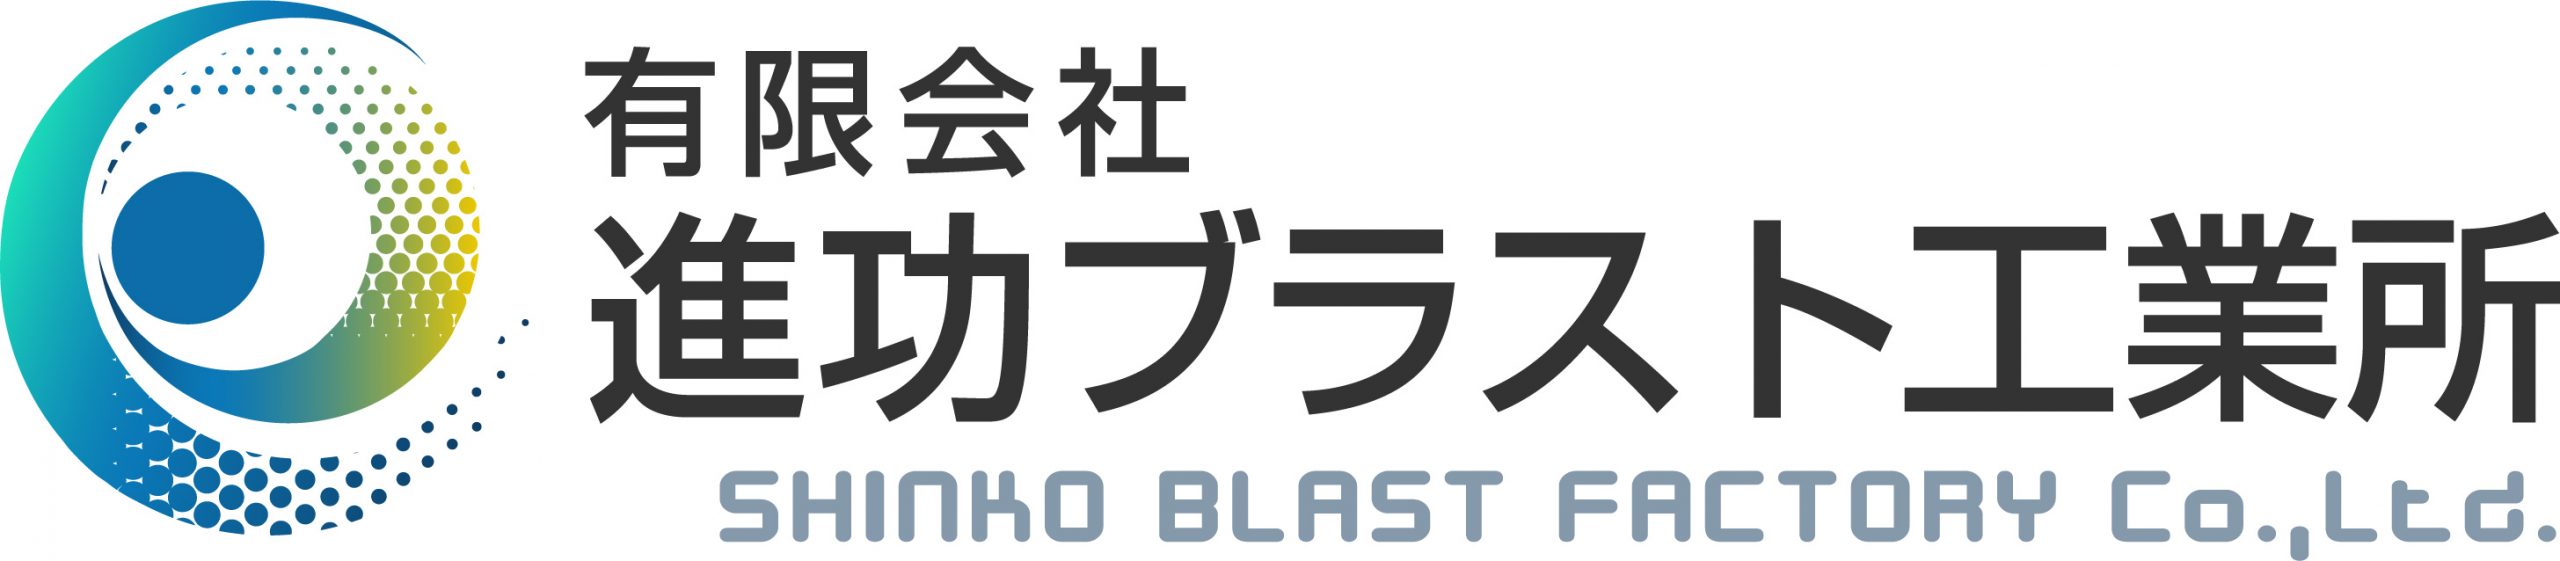 shinkoblast-logo